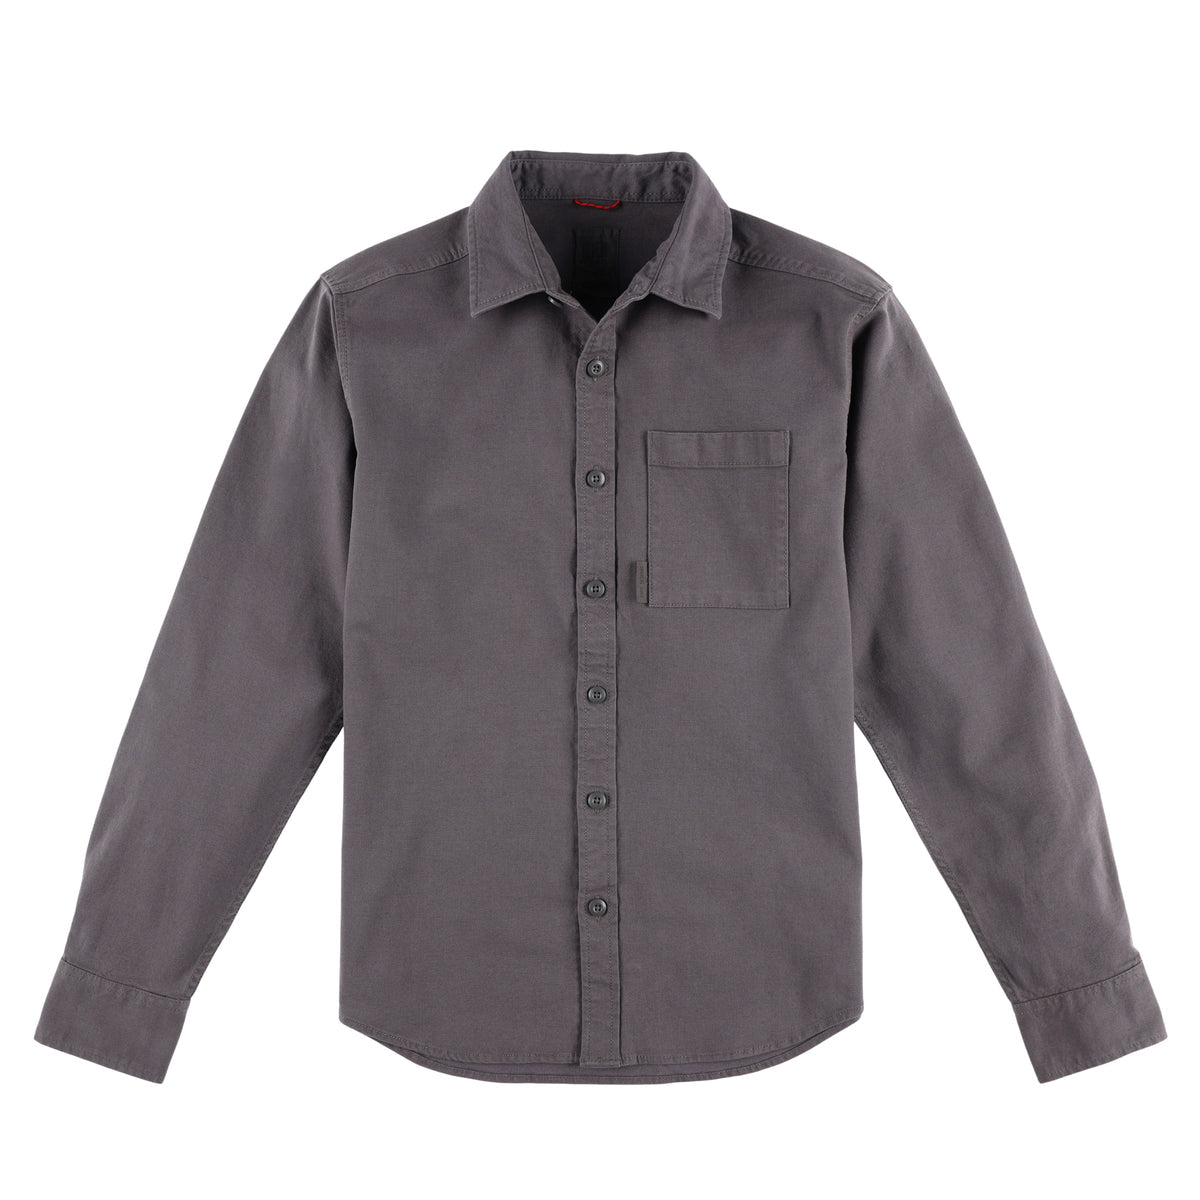 Topo Designs Men's Dirt Shirt Long Sleeve